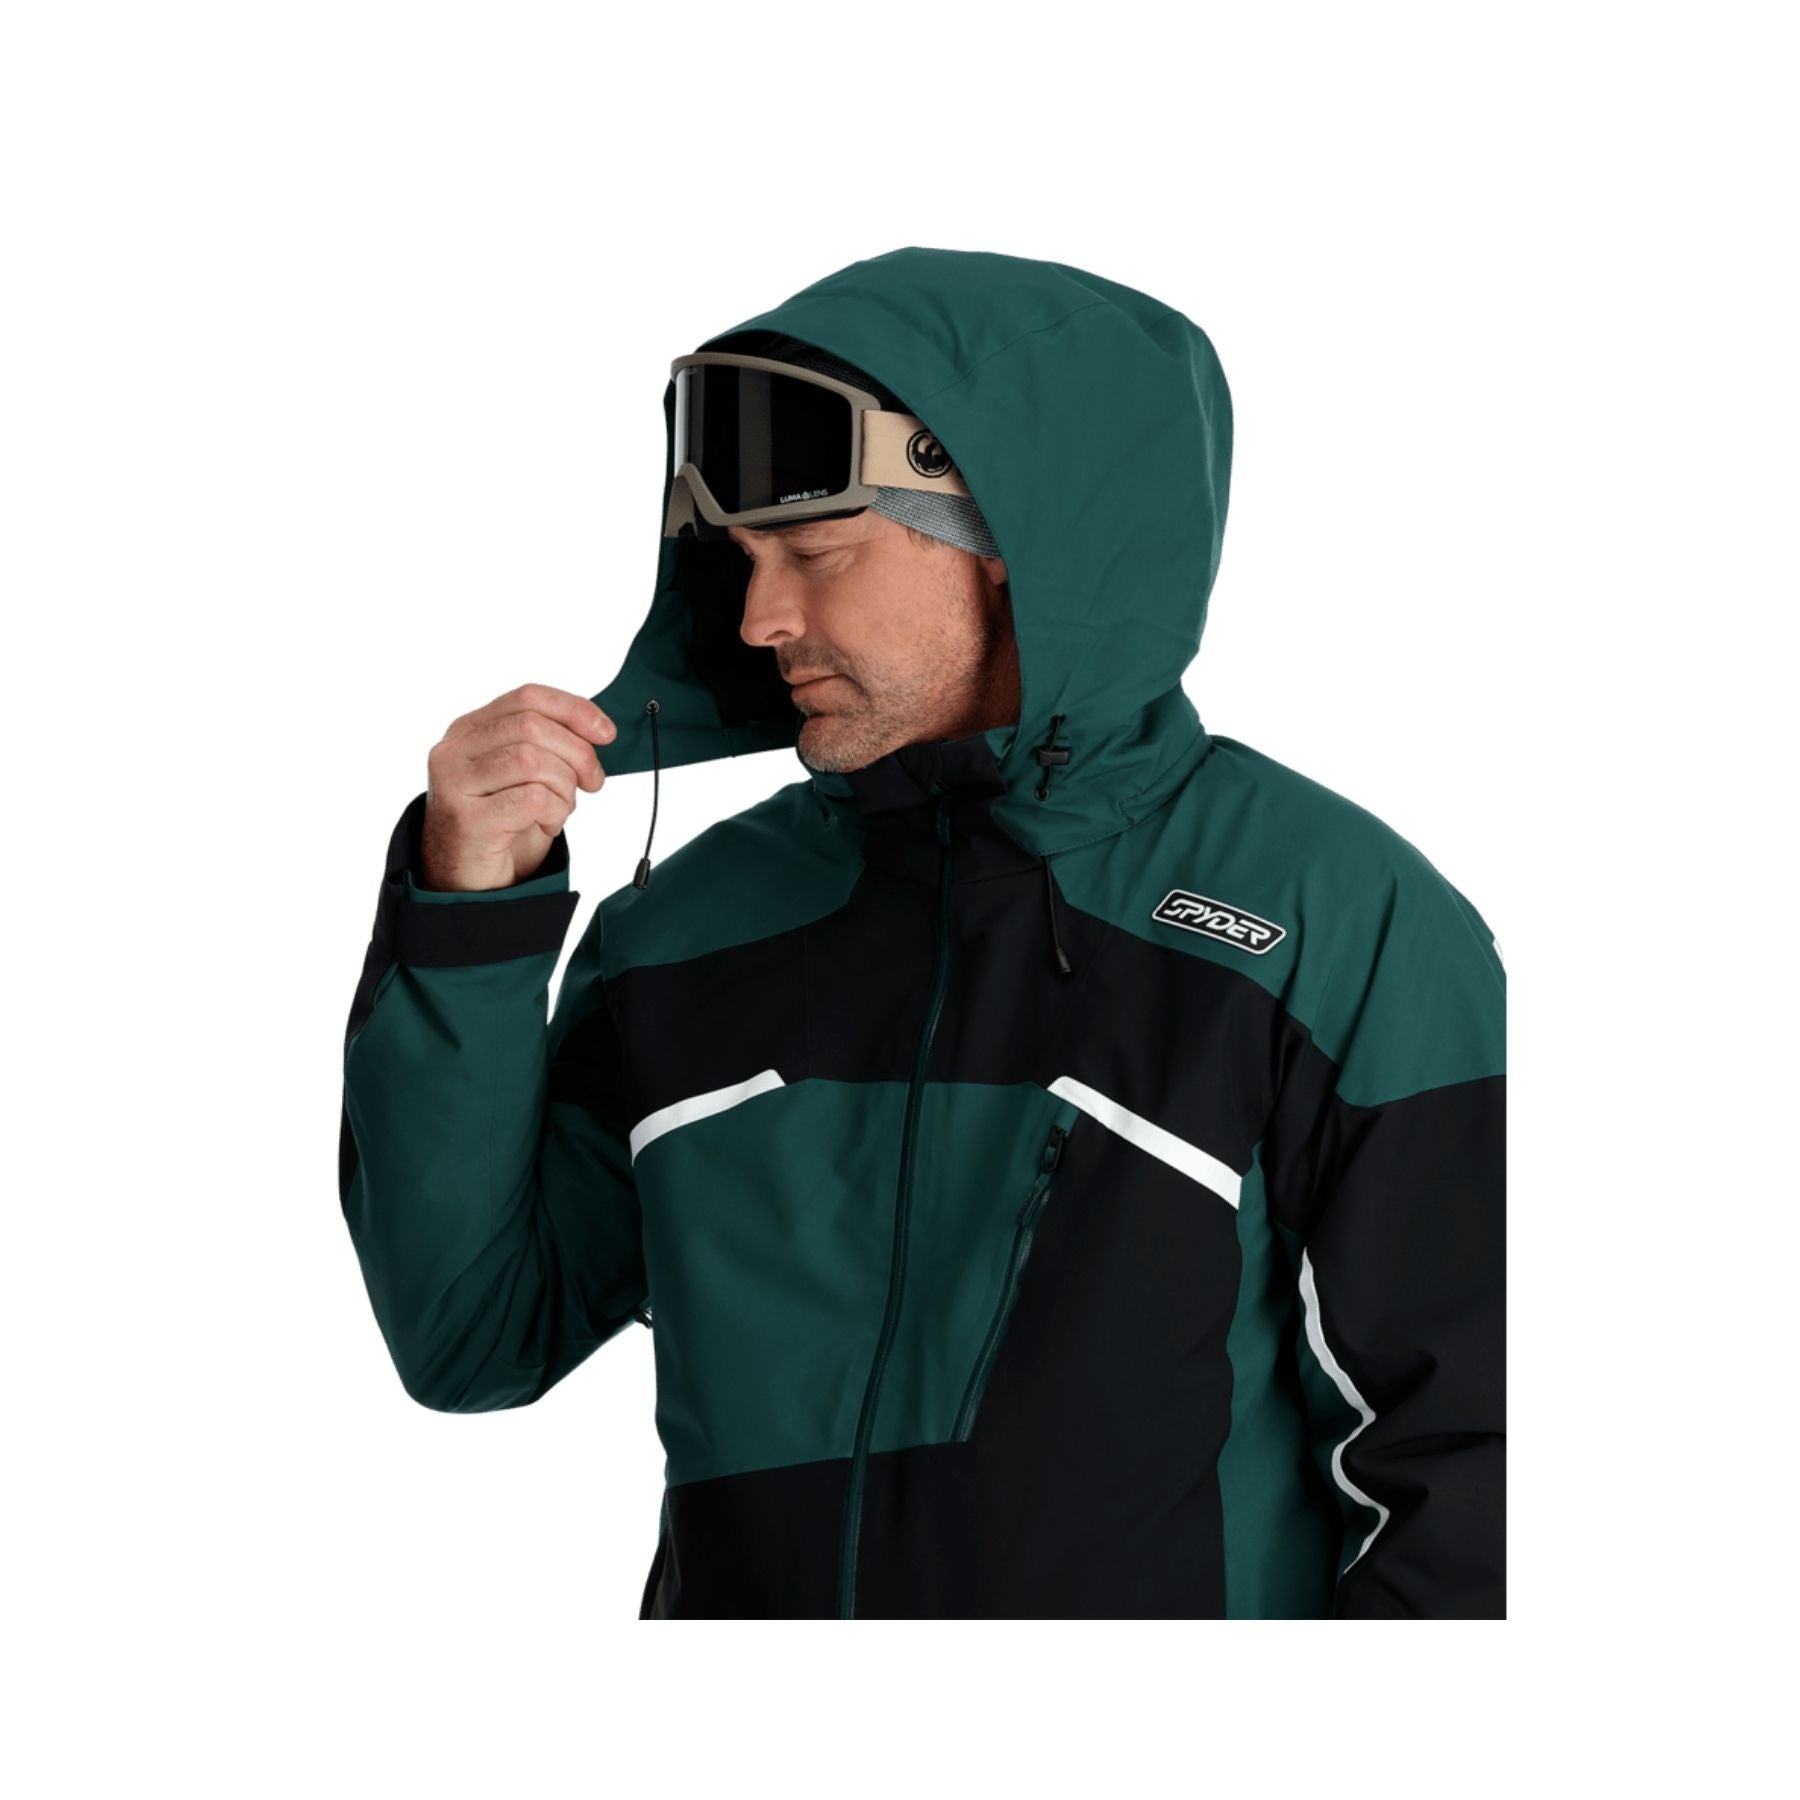 Spyder Leader Jacket in Cypress Green